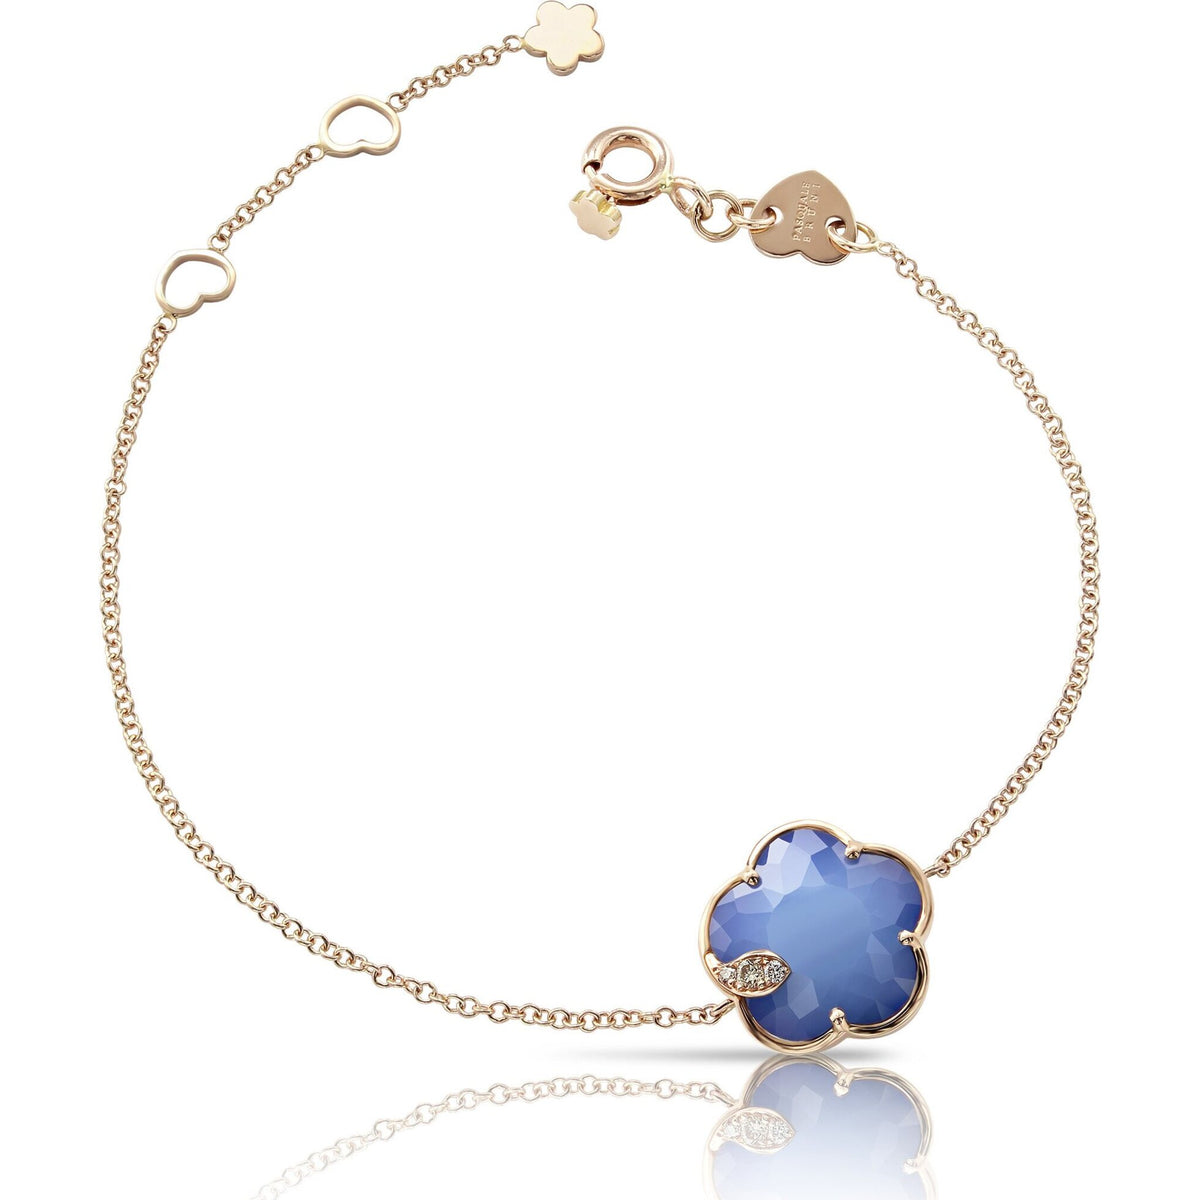 18k Gold, Lapis Lazuli, Mother-of-Pearl & Turquoise Alhambra Bracelet, Authentic & Vintage